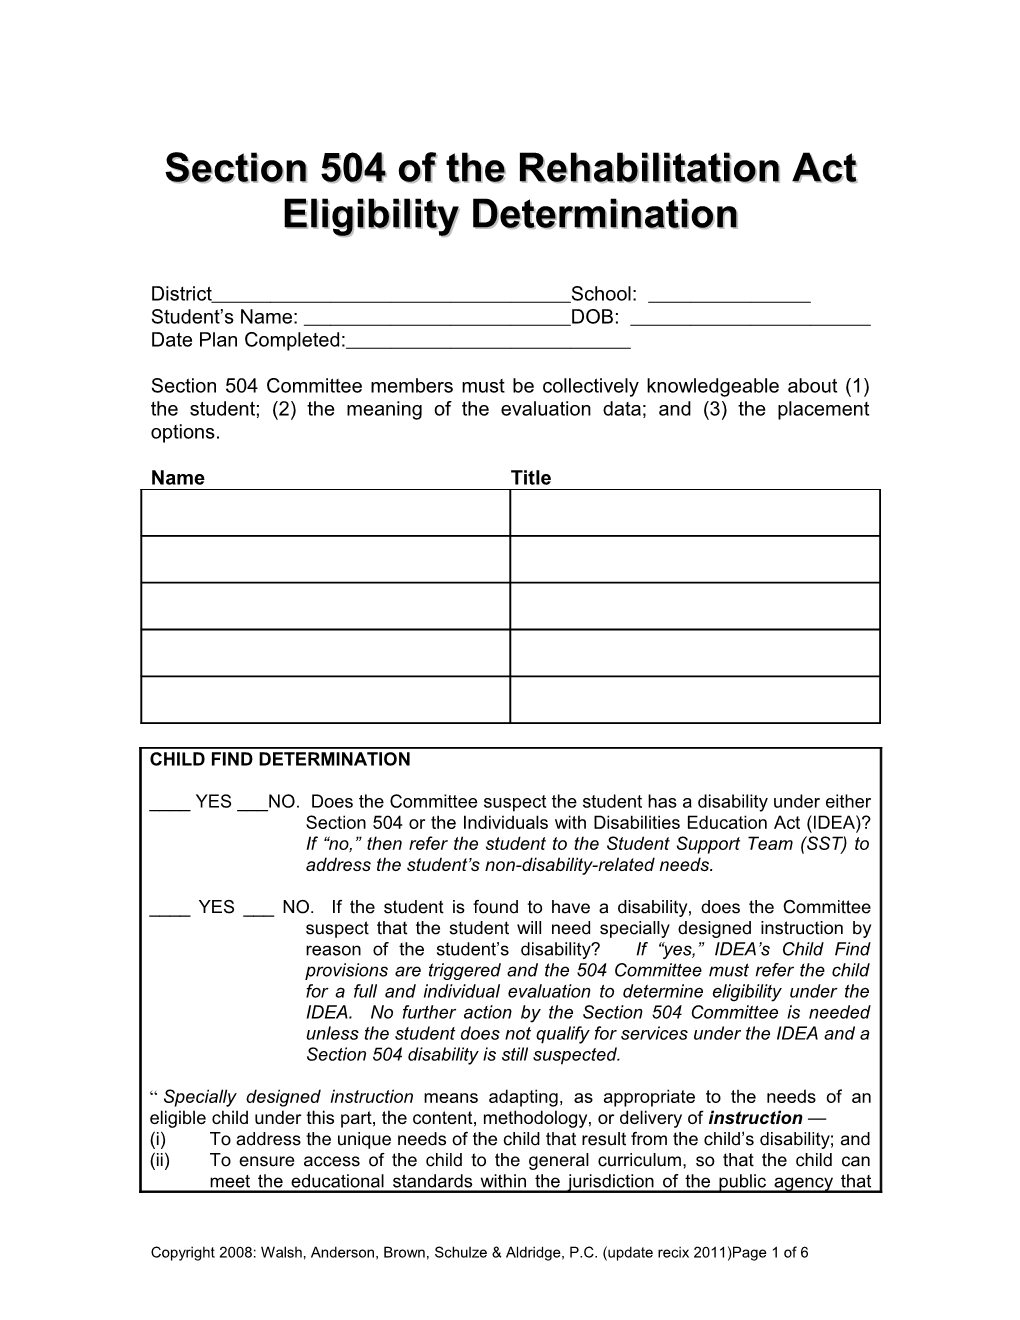 Eligibility Determination: Section 504/Ada